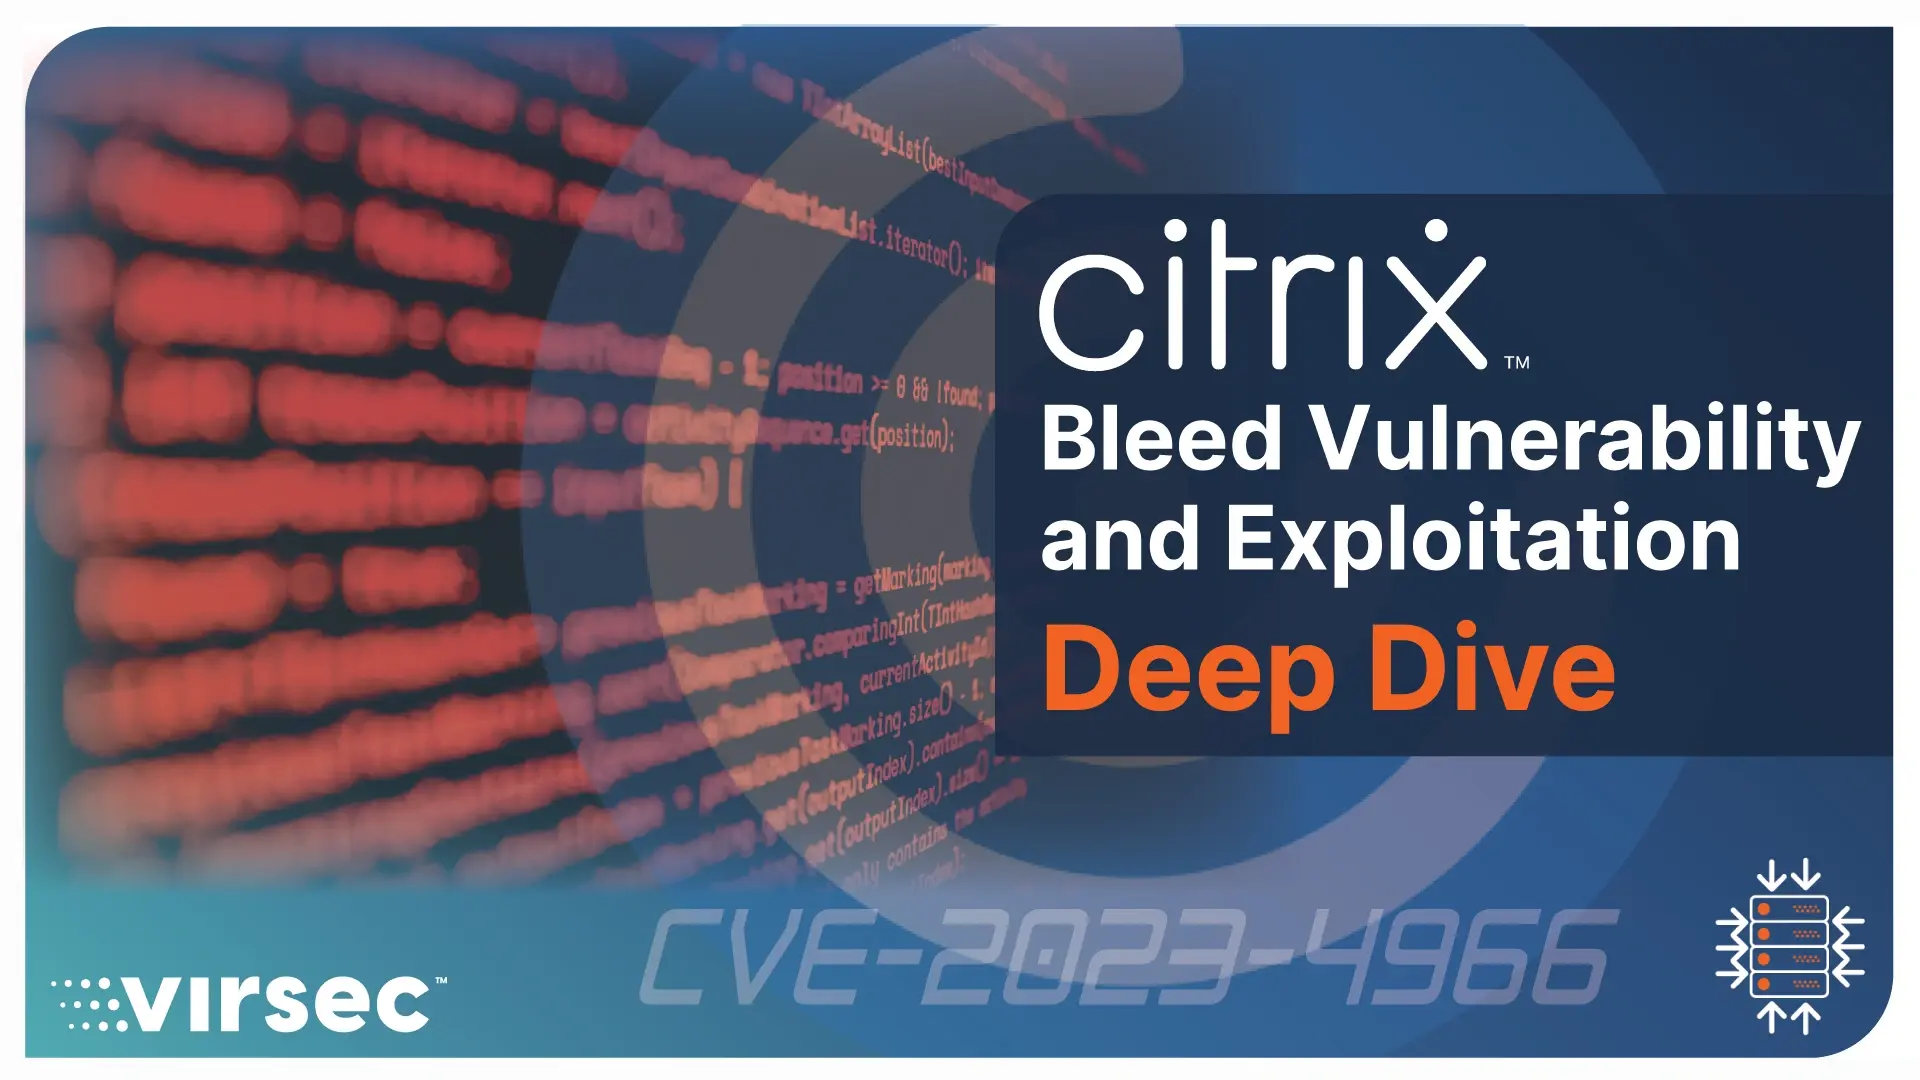 Citrix Bleed Vulnerability